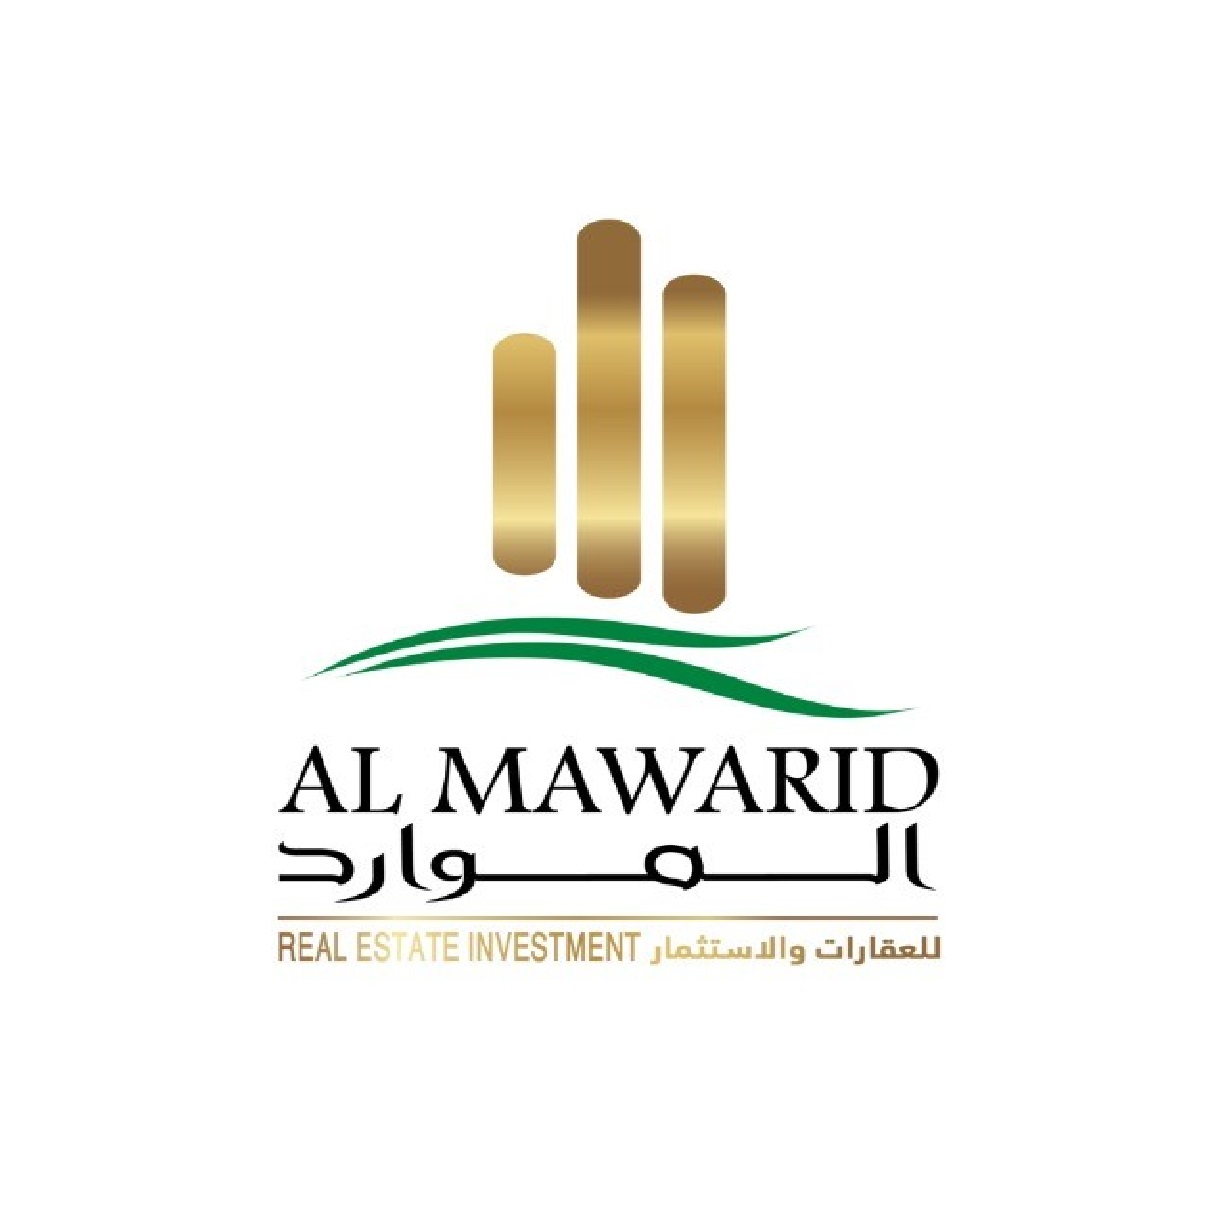 Almawarid group